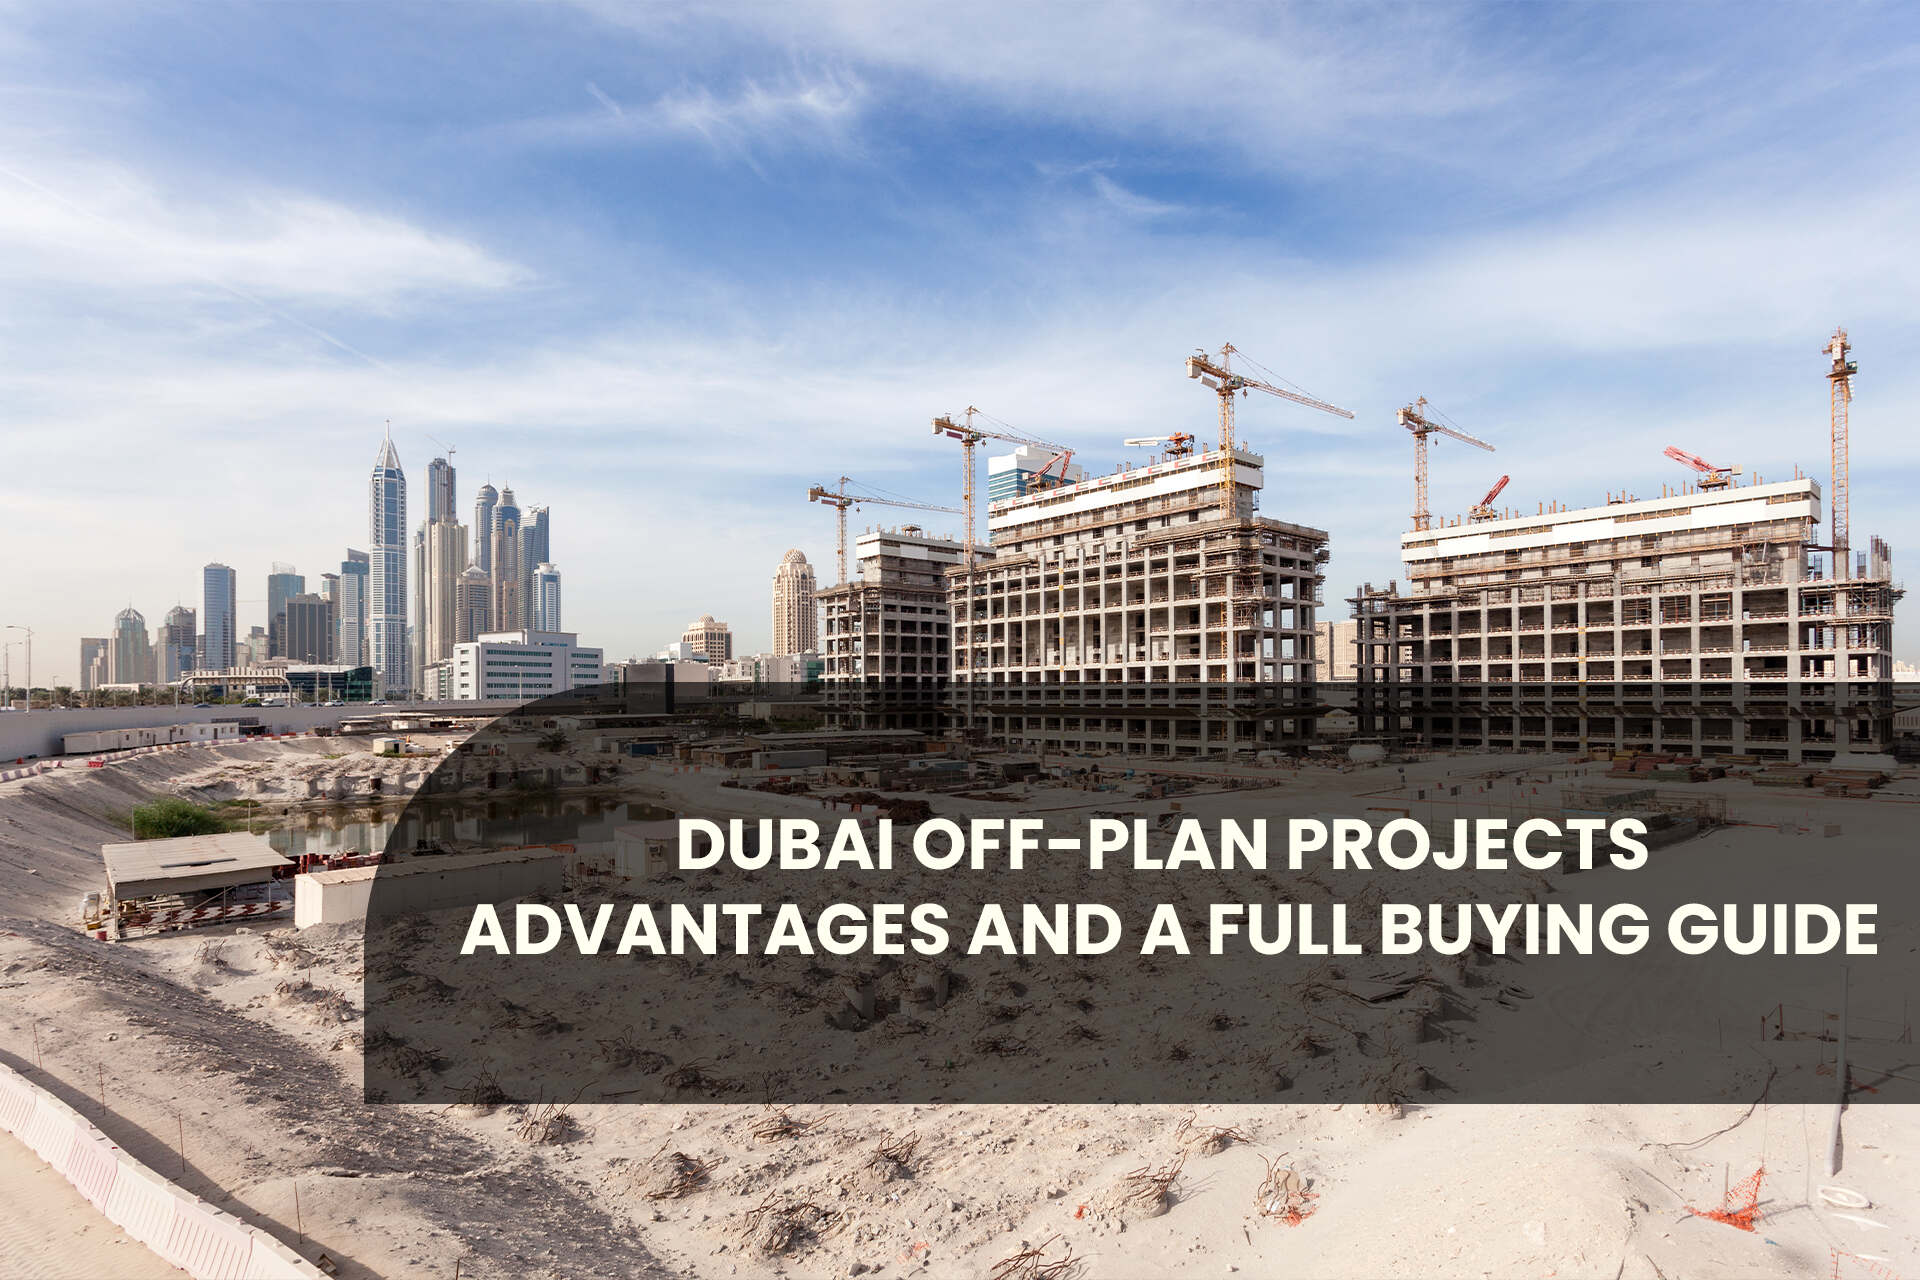 Dubai off-plan projects